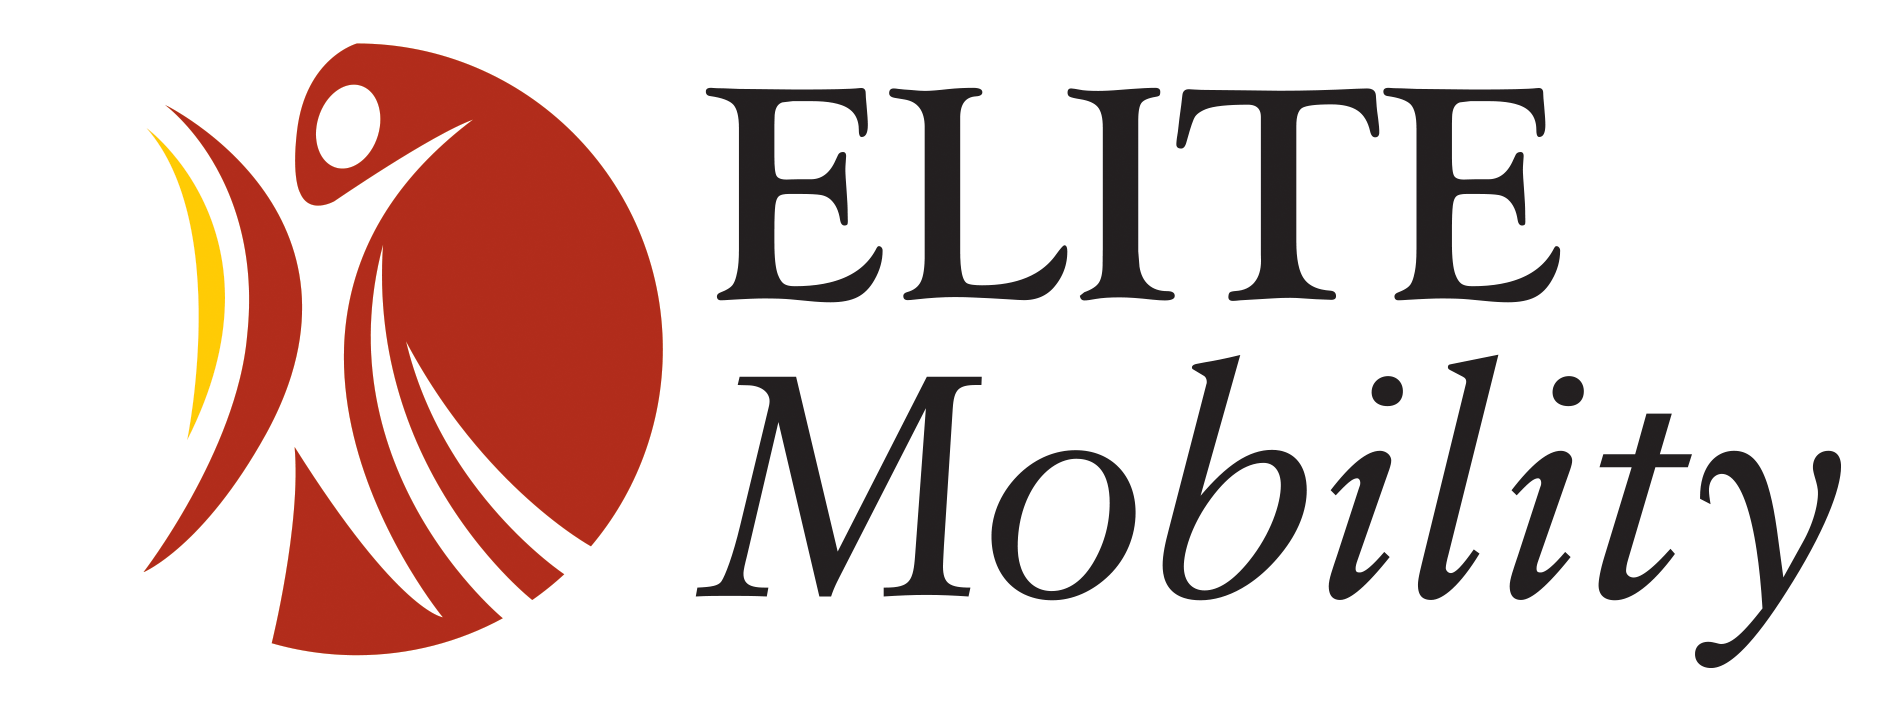 A M Mobility Logo - Elite Mobility Logo Double Line International Balloon